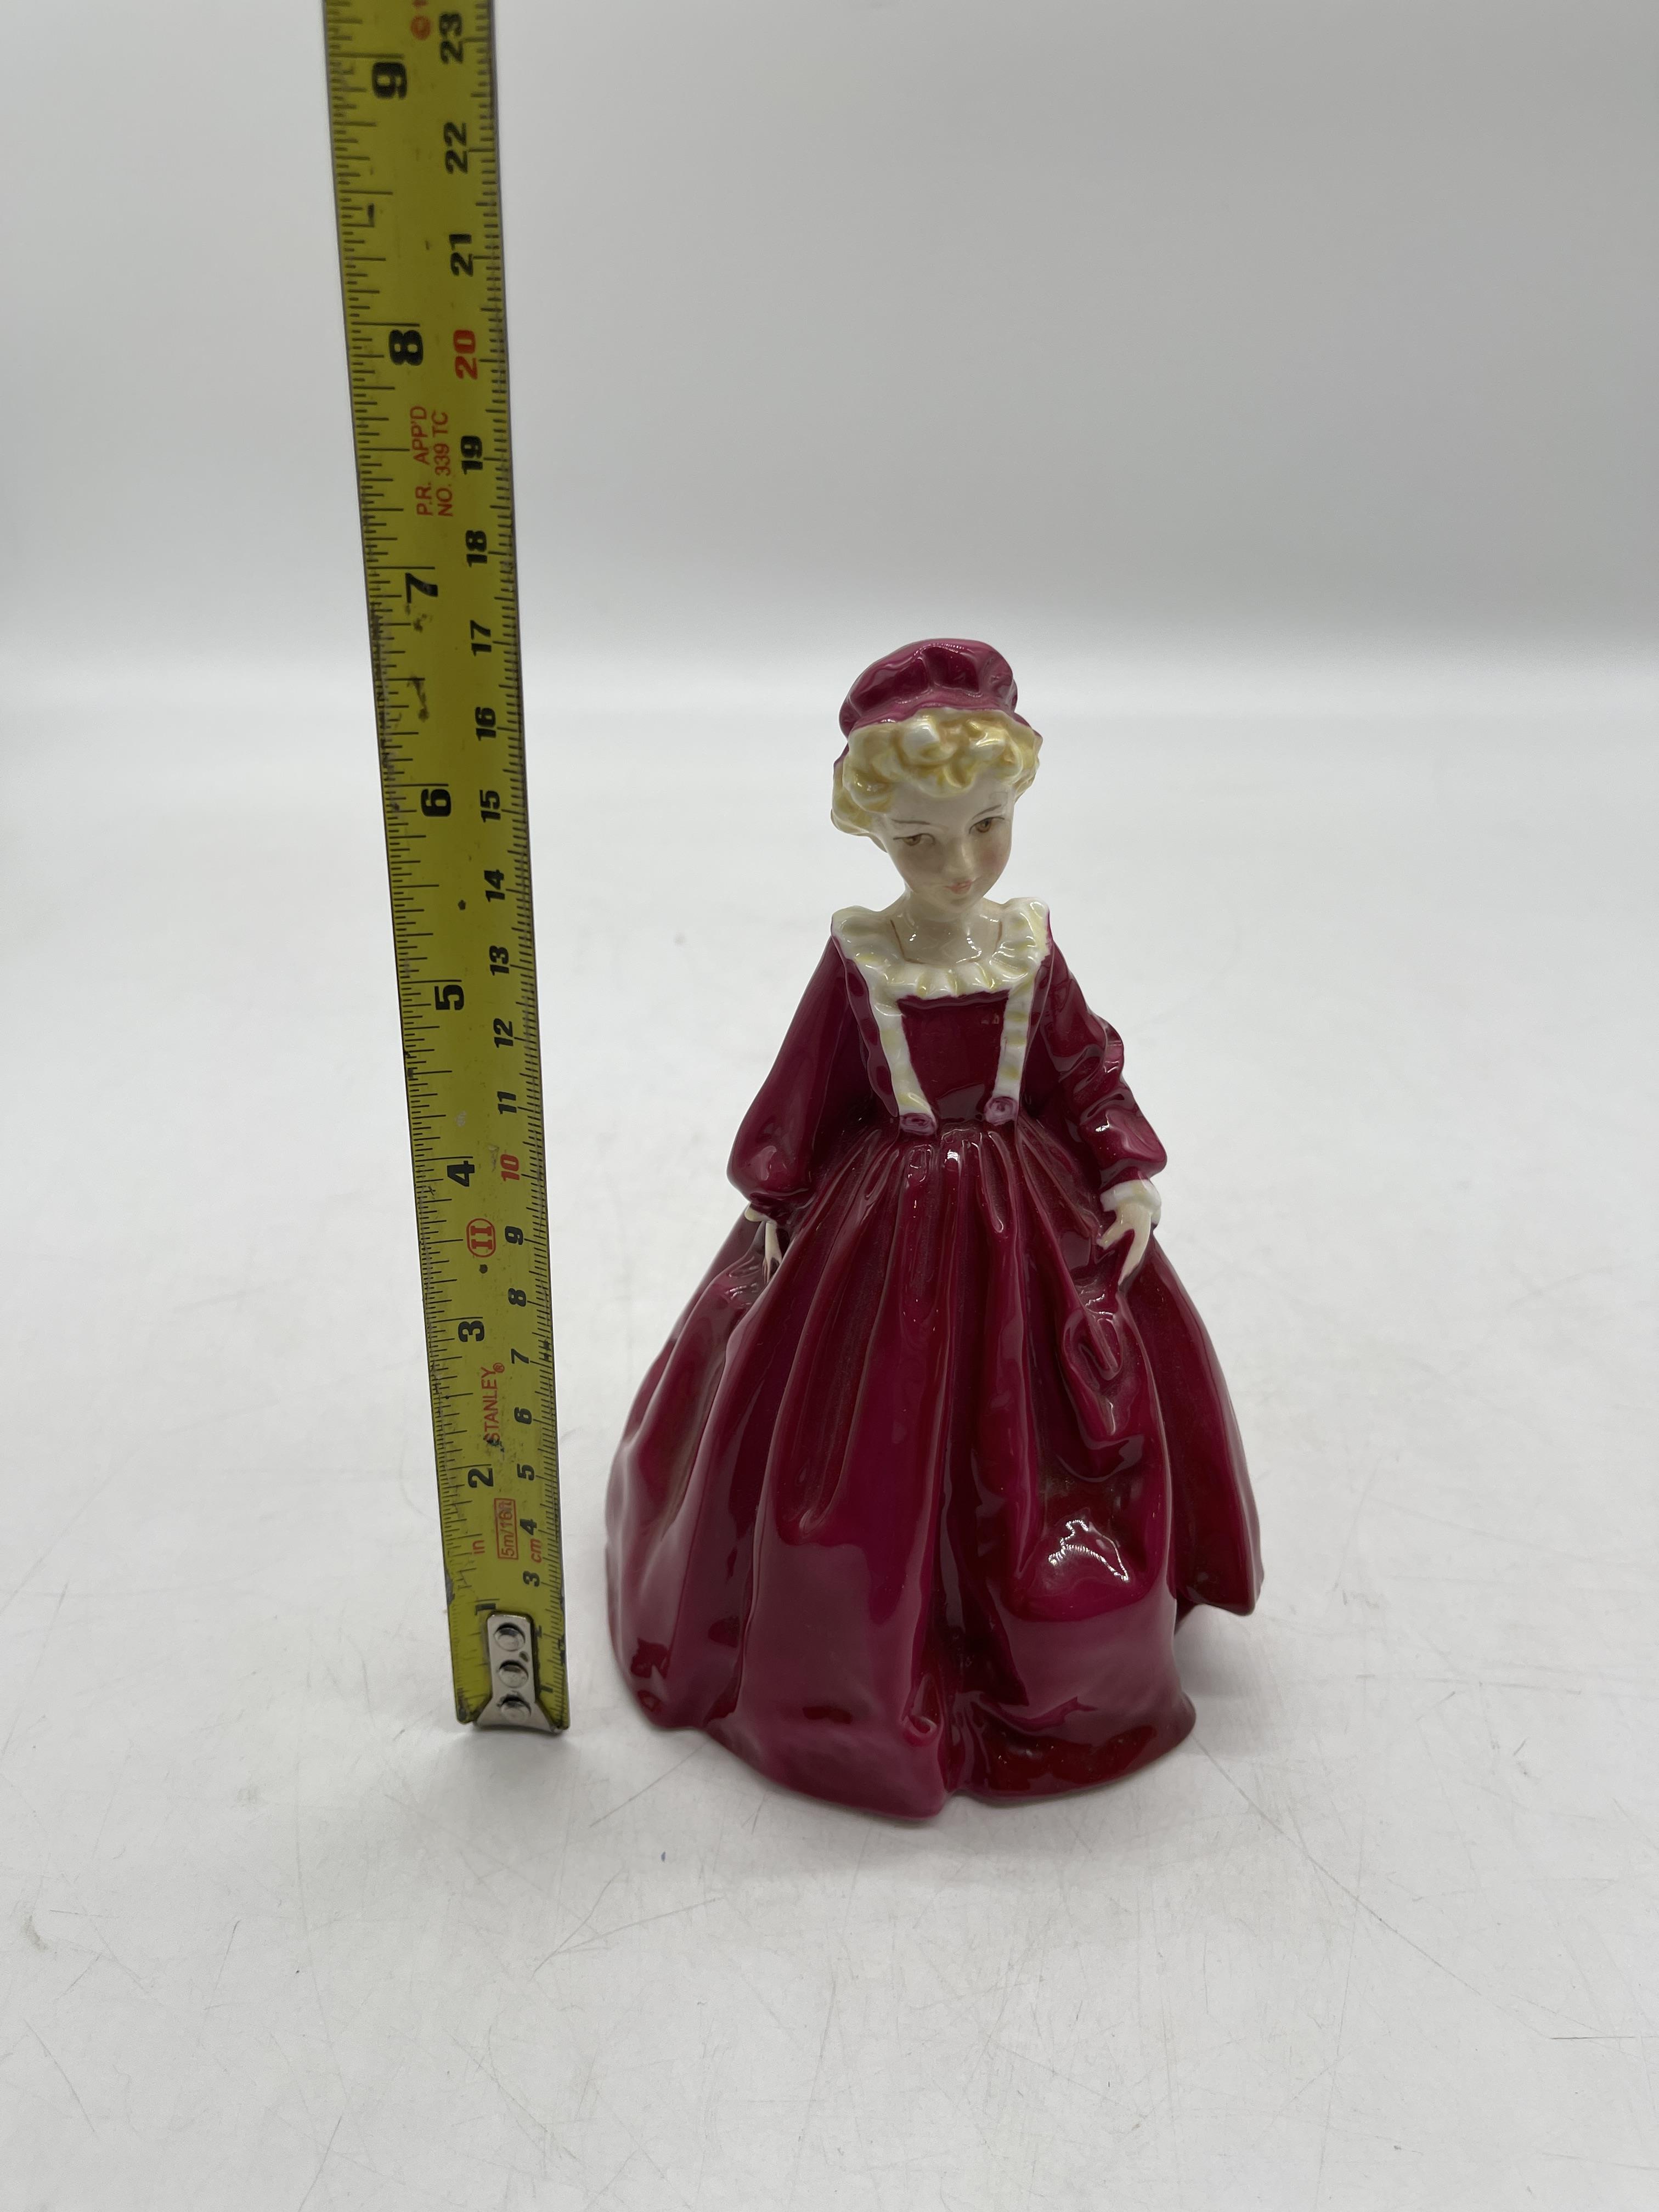 Pink Royal Doulton ceramic figurines - Image 34 of 41